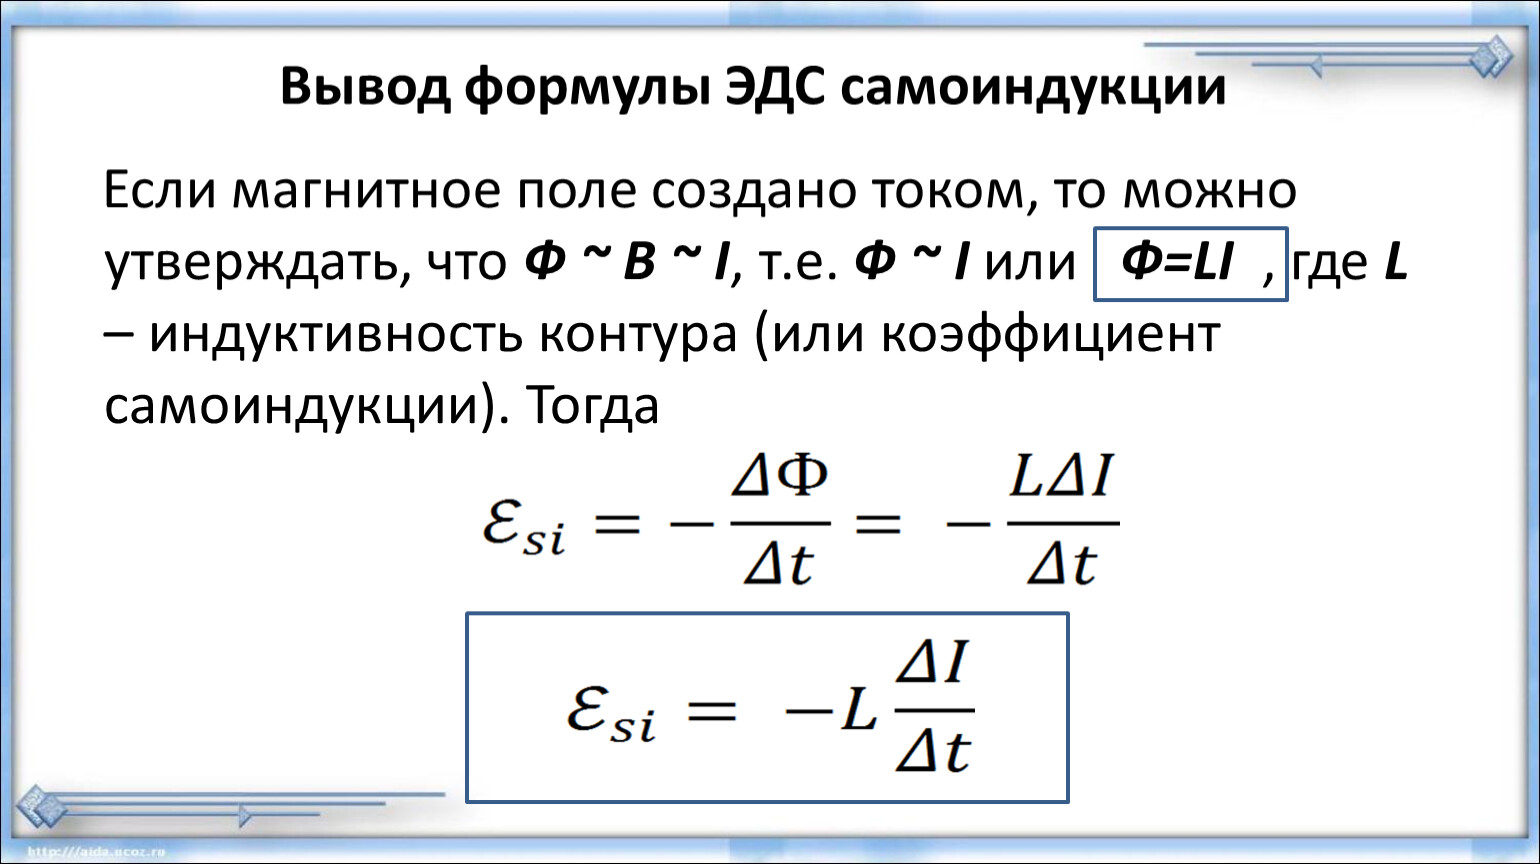 Величина эдс формула. ЭДС самоиндукции формула. ЭДС самоиндукции формула через Индуктивность. Формула для расчета ЭДС самоиндукции. Формула ЭДС самоиндукции в катушке.